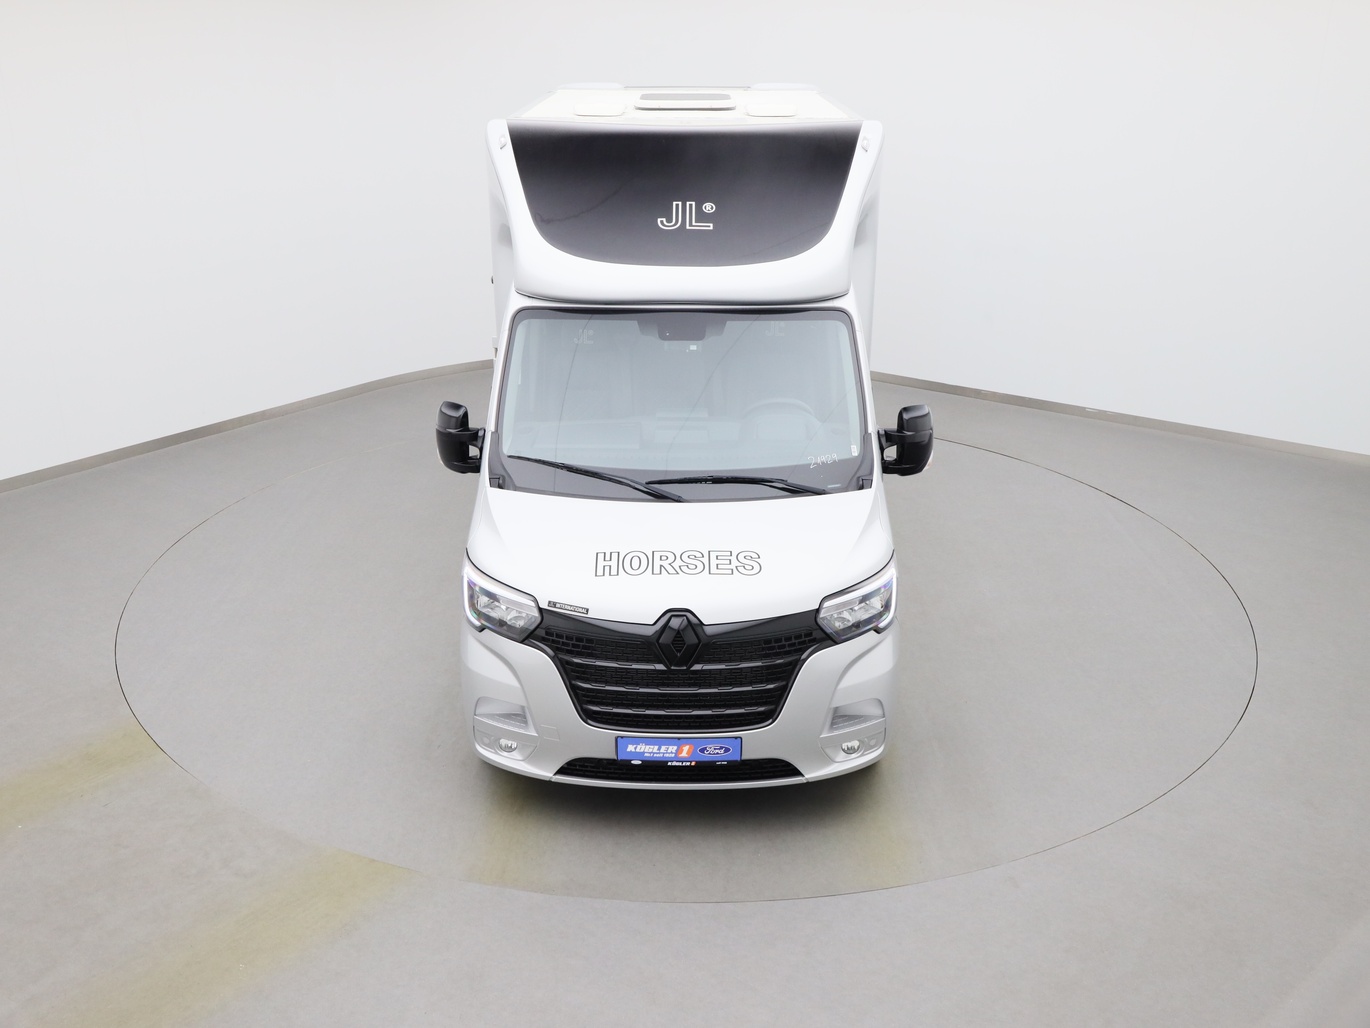  Renault Master Pferdetransporter Jach Exklusiv 180PS Aut in Silber 